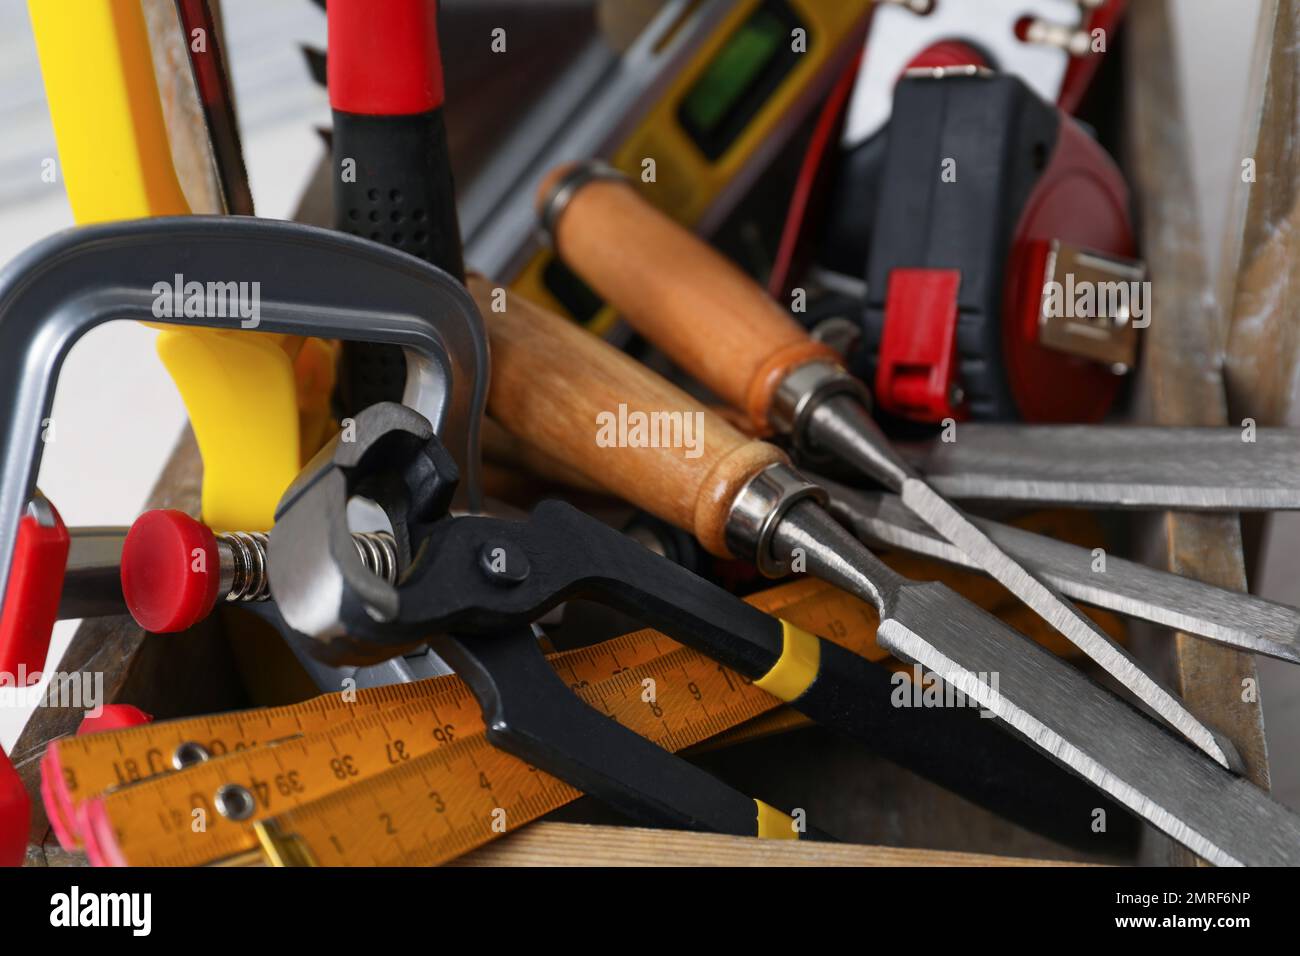 Set of different carpenter's tools, closeup view Stock Photo